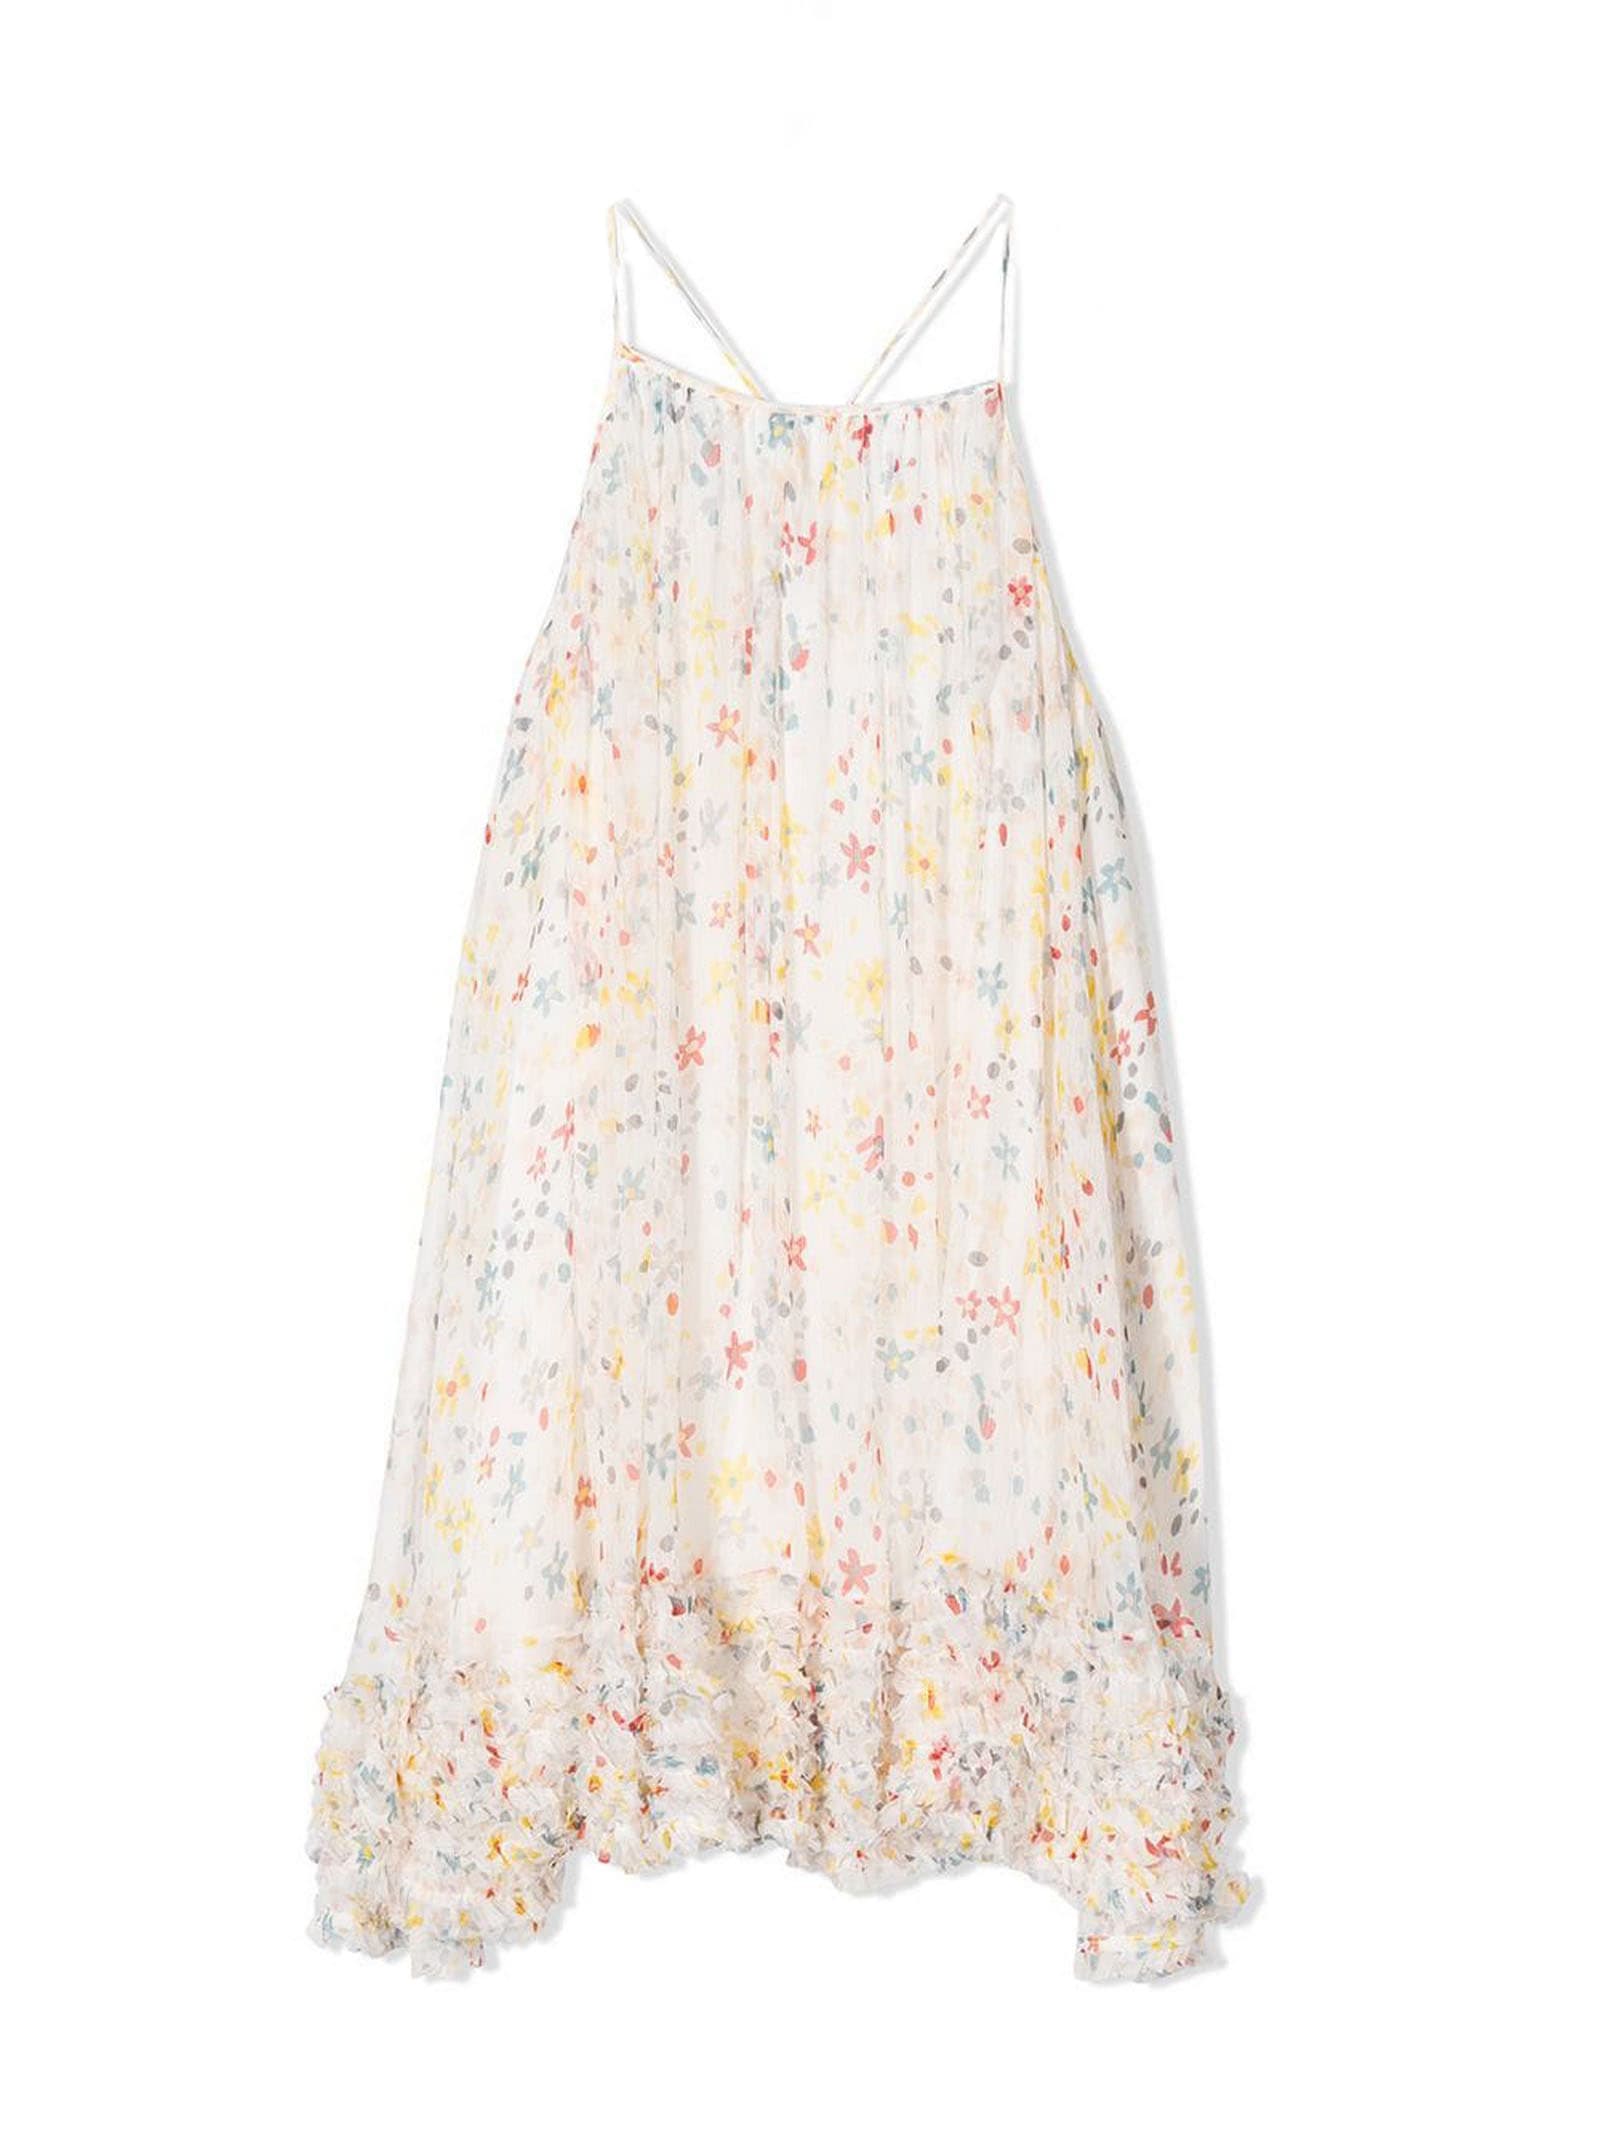 Stella McCartney Ivory Silk Floral Print Dress